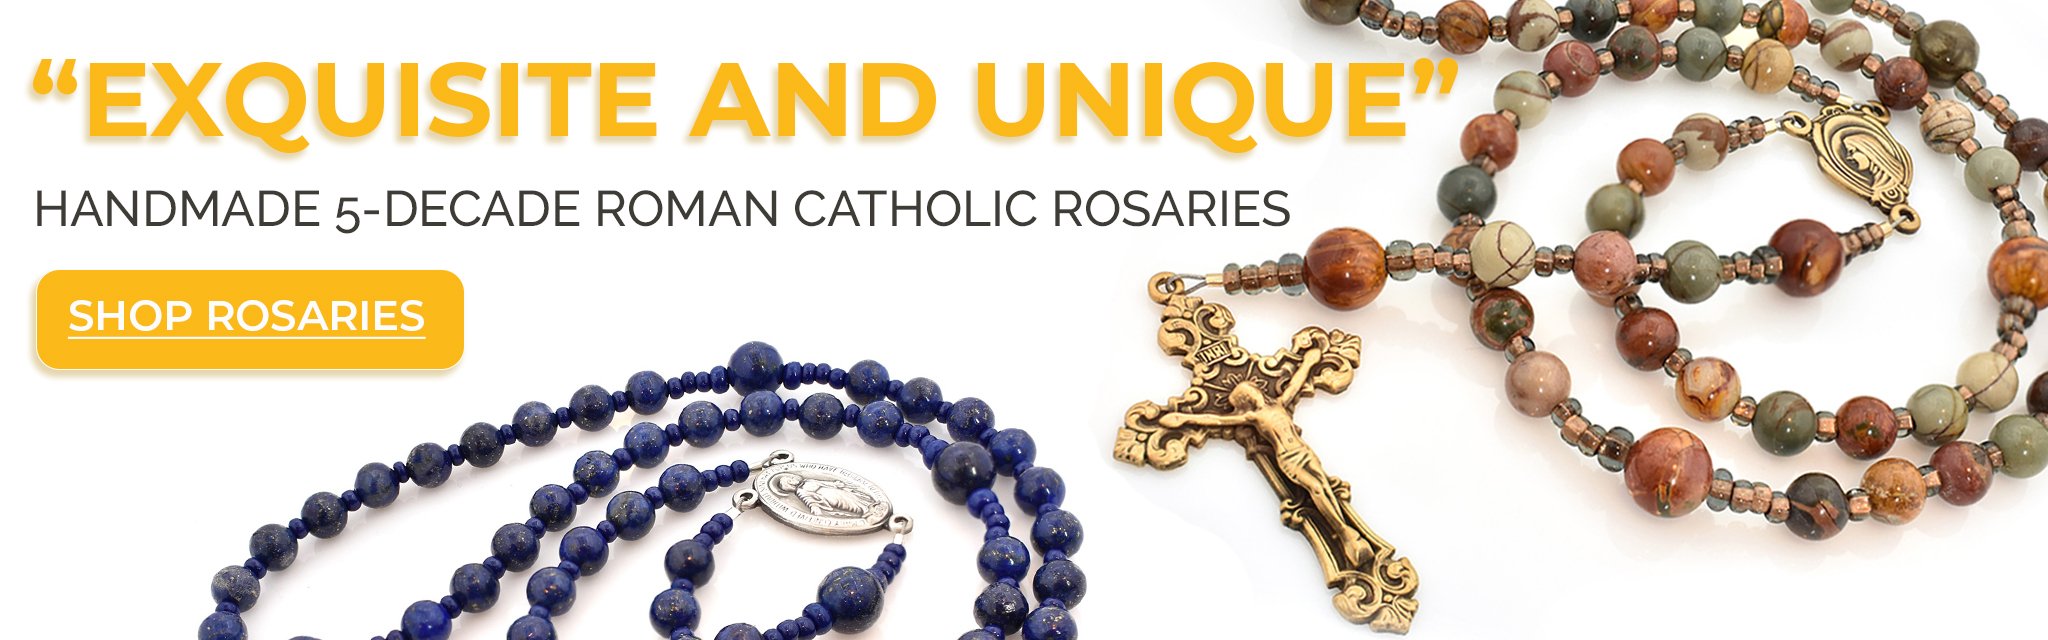 Roman Catholic Rosaries